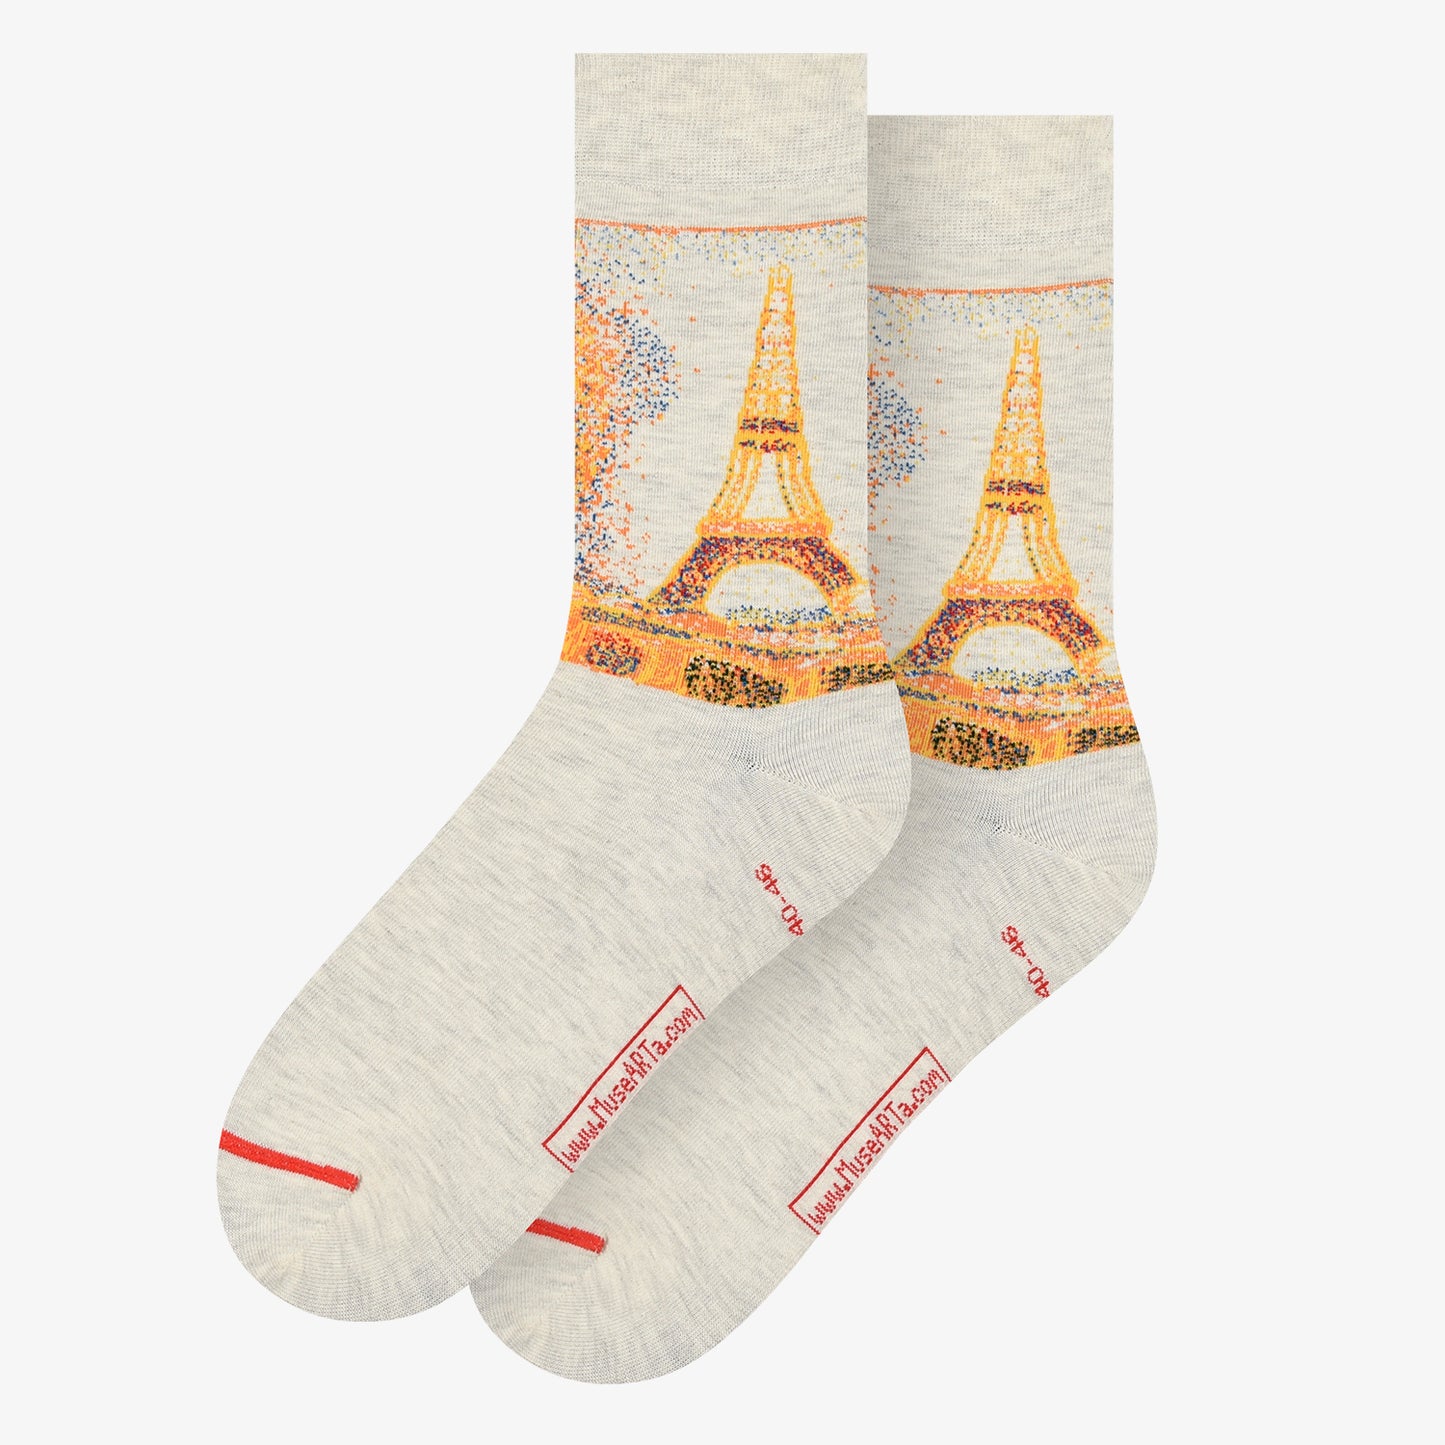 Georges Seurat - Der Eiffelturm